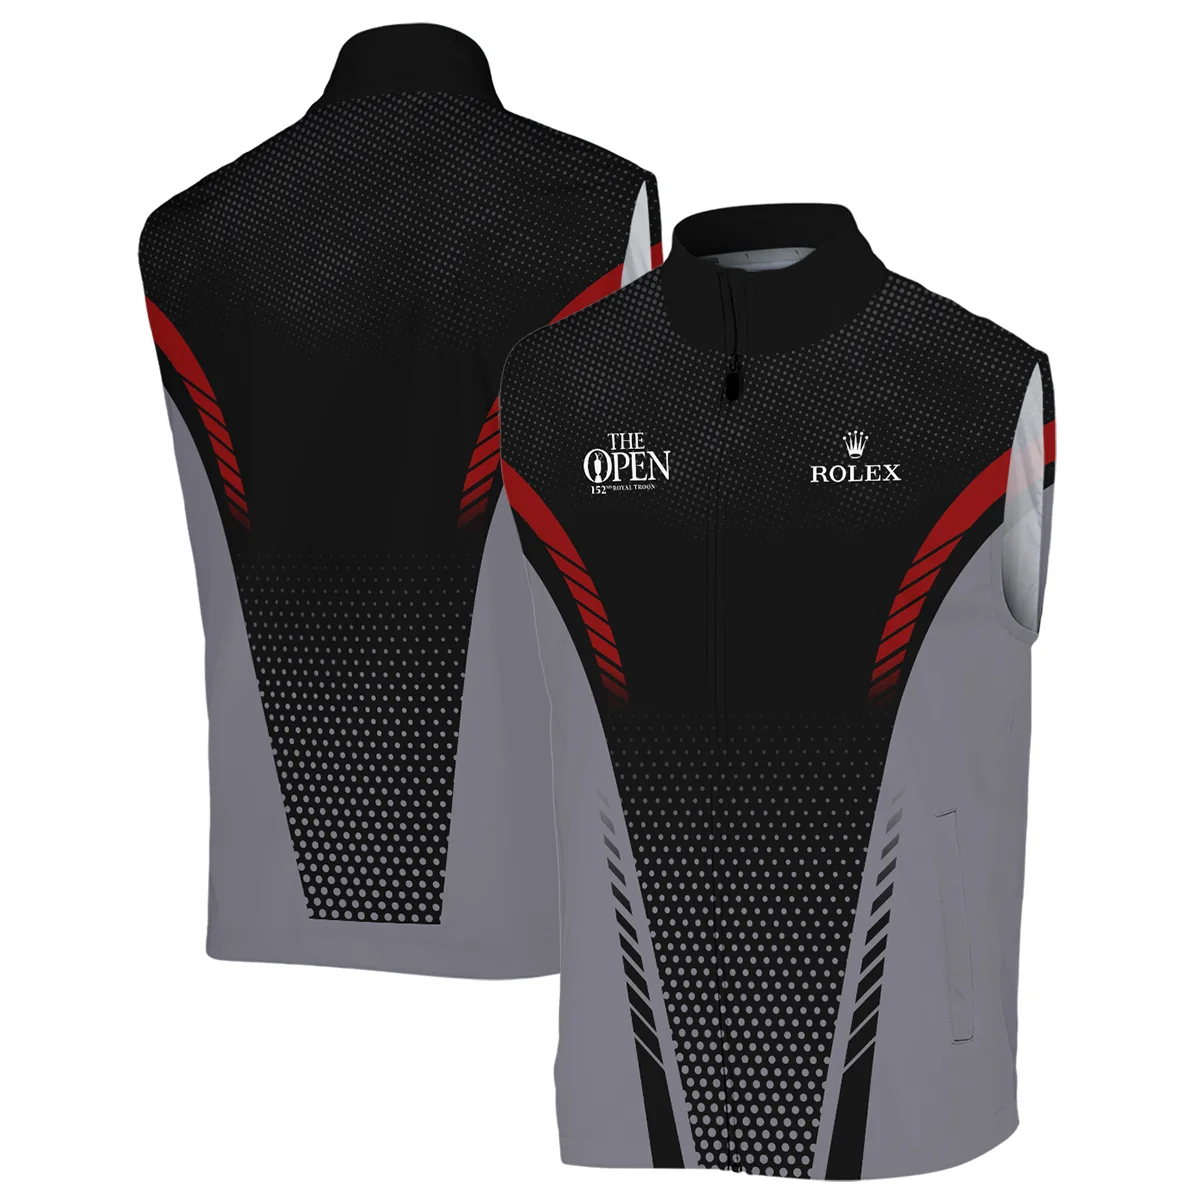 Golf Sport Style 152nd Open Championship Rolex Zipper Polo Shirt All Over Prints QTTOP250624A1ROXZPL